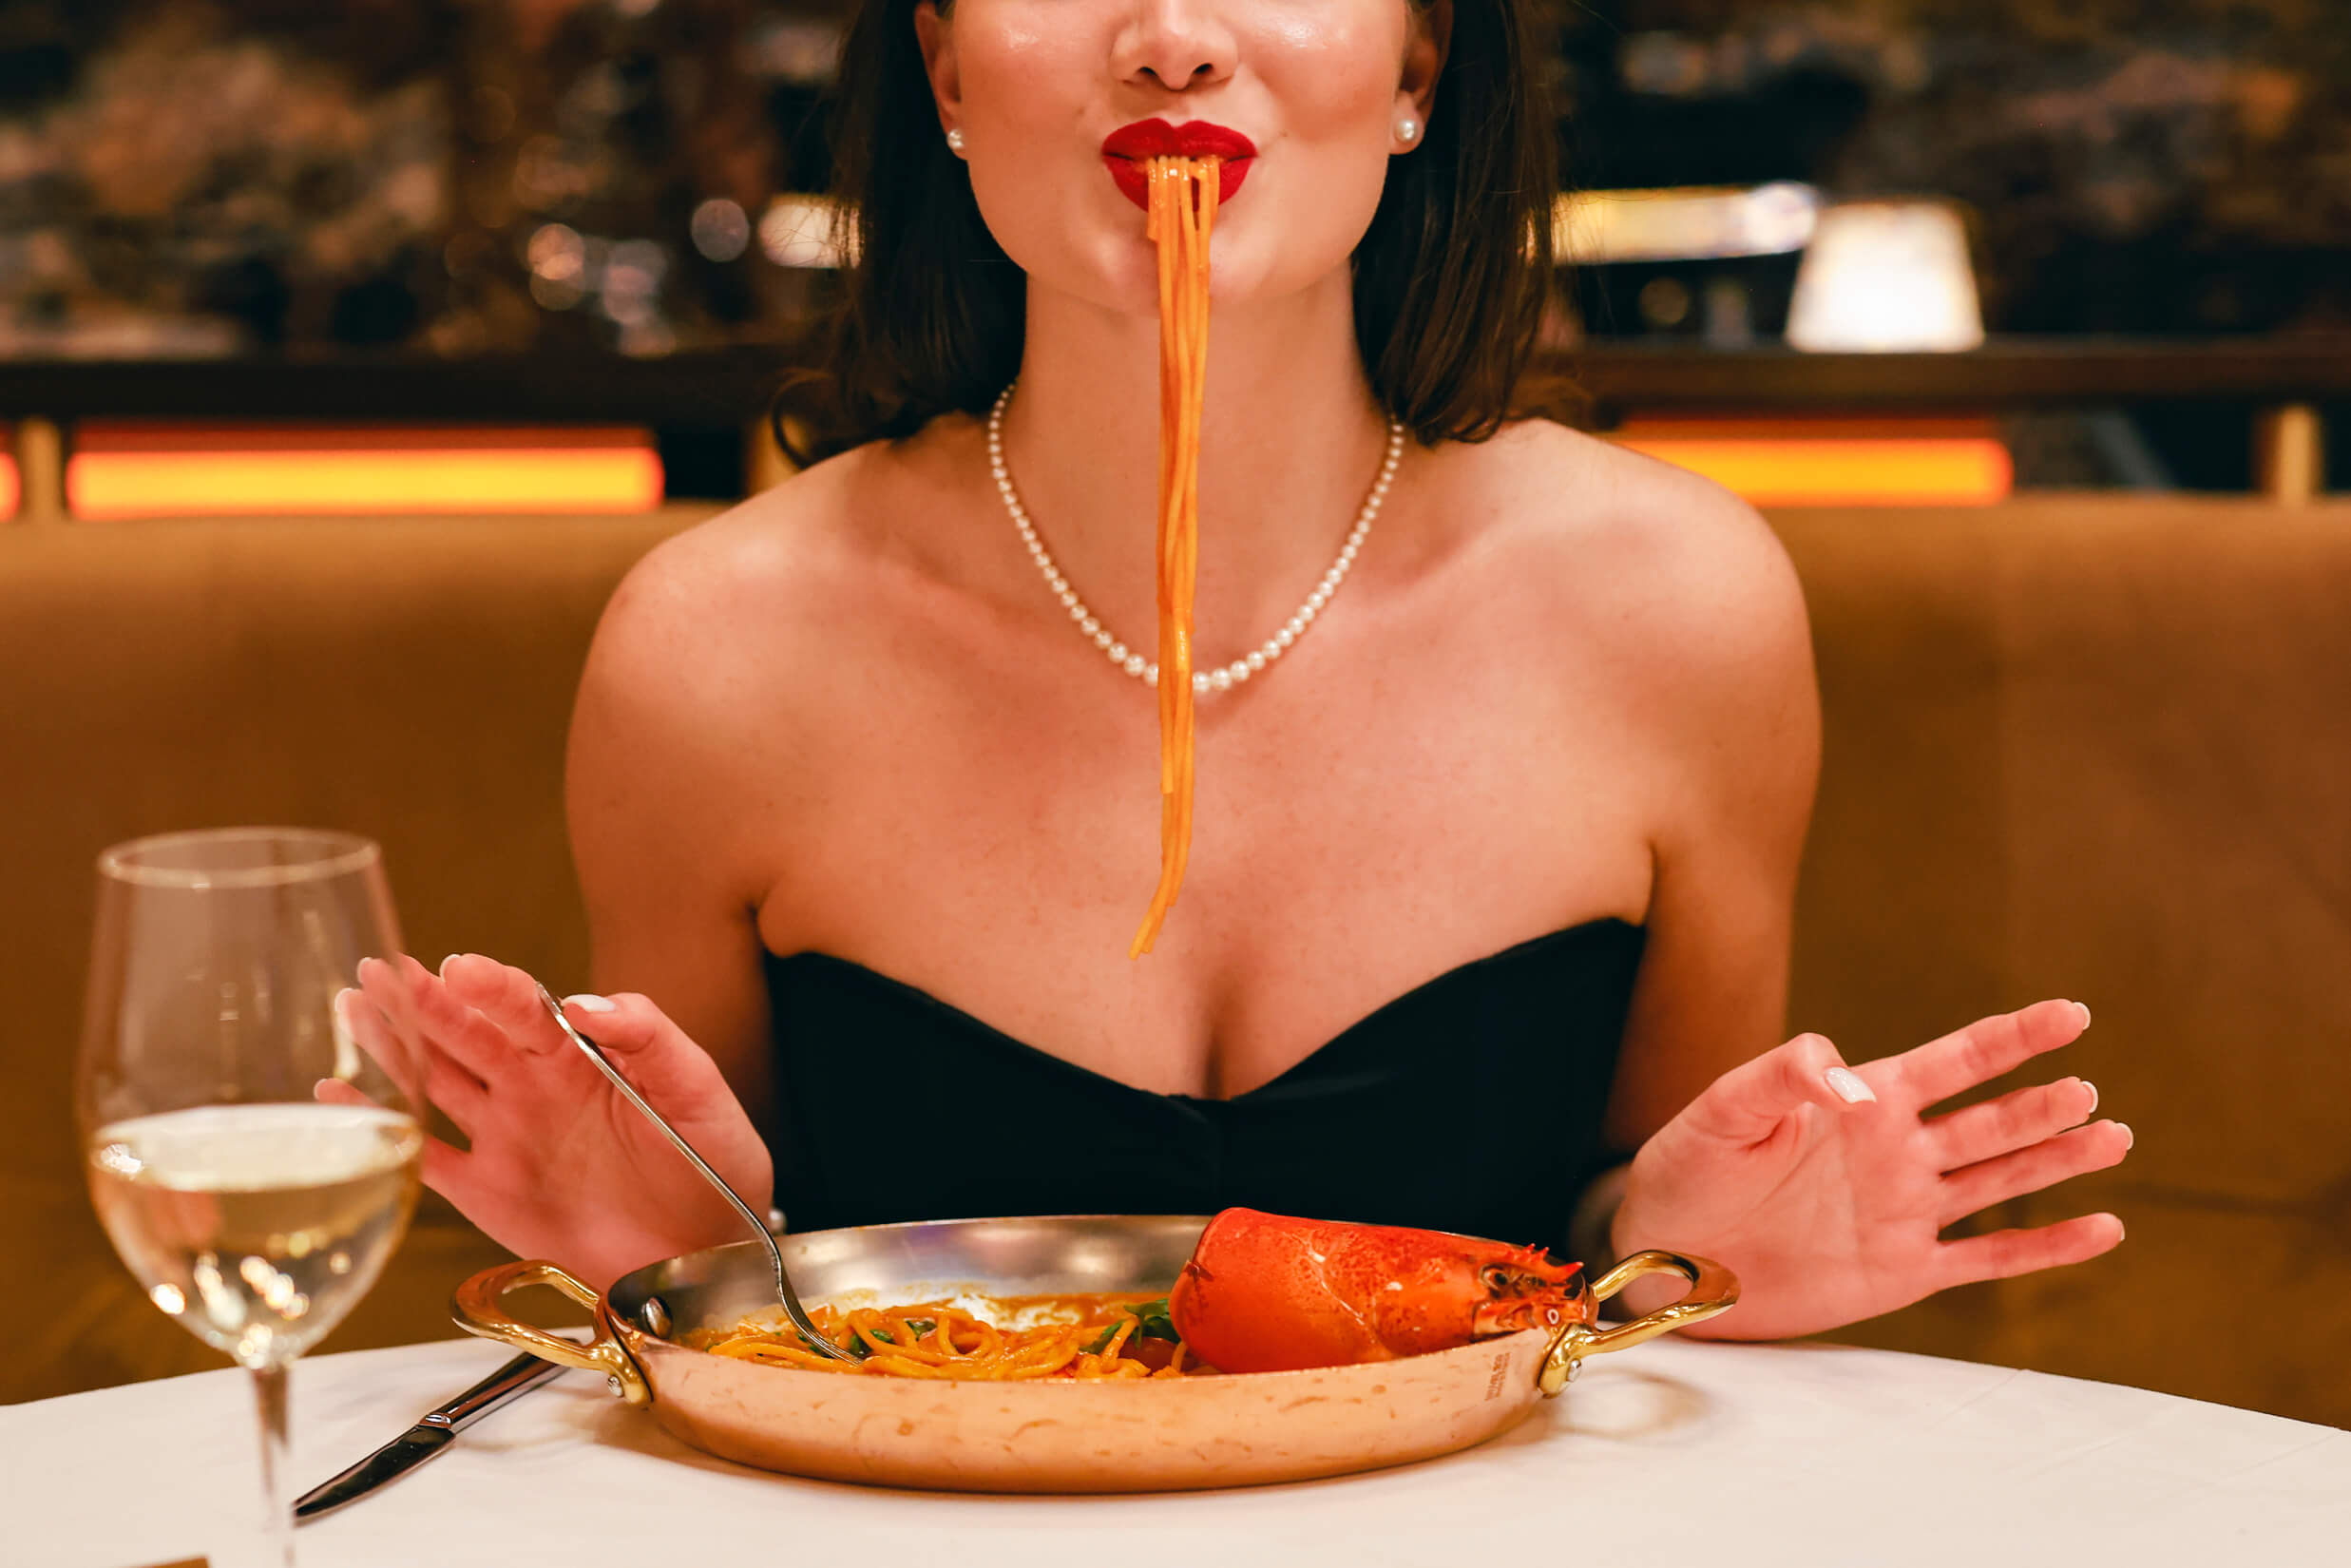 Lady eating spaghetti